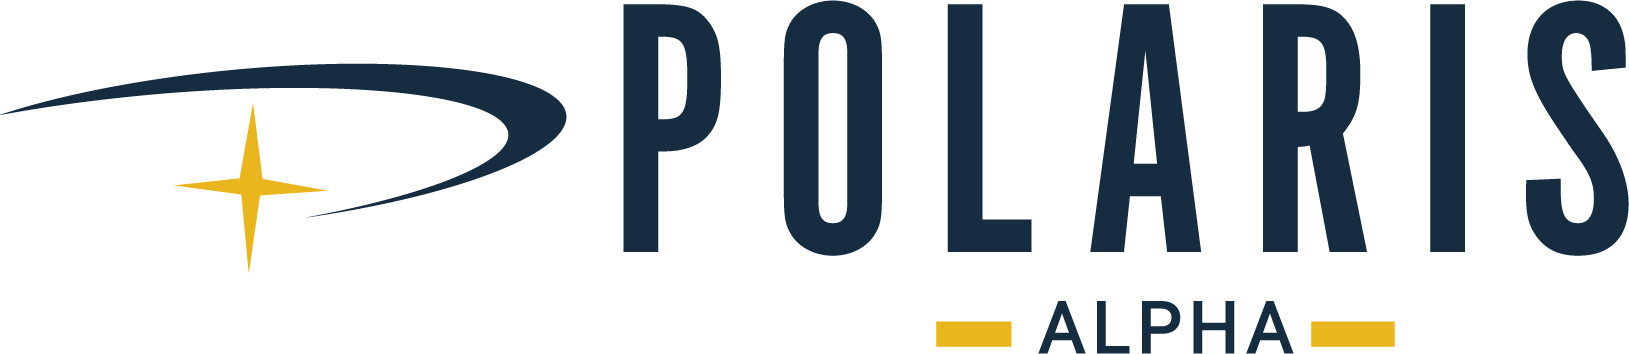 Polaris Alpha - Horizontal - Full Color - Positive.png